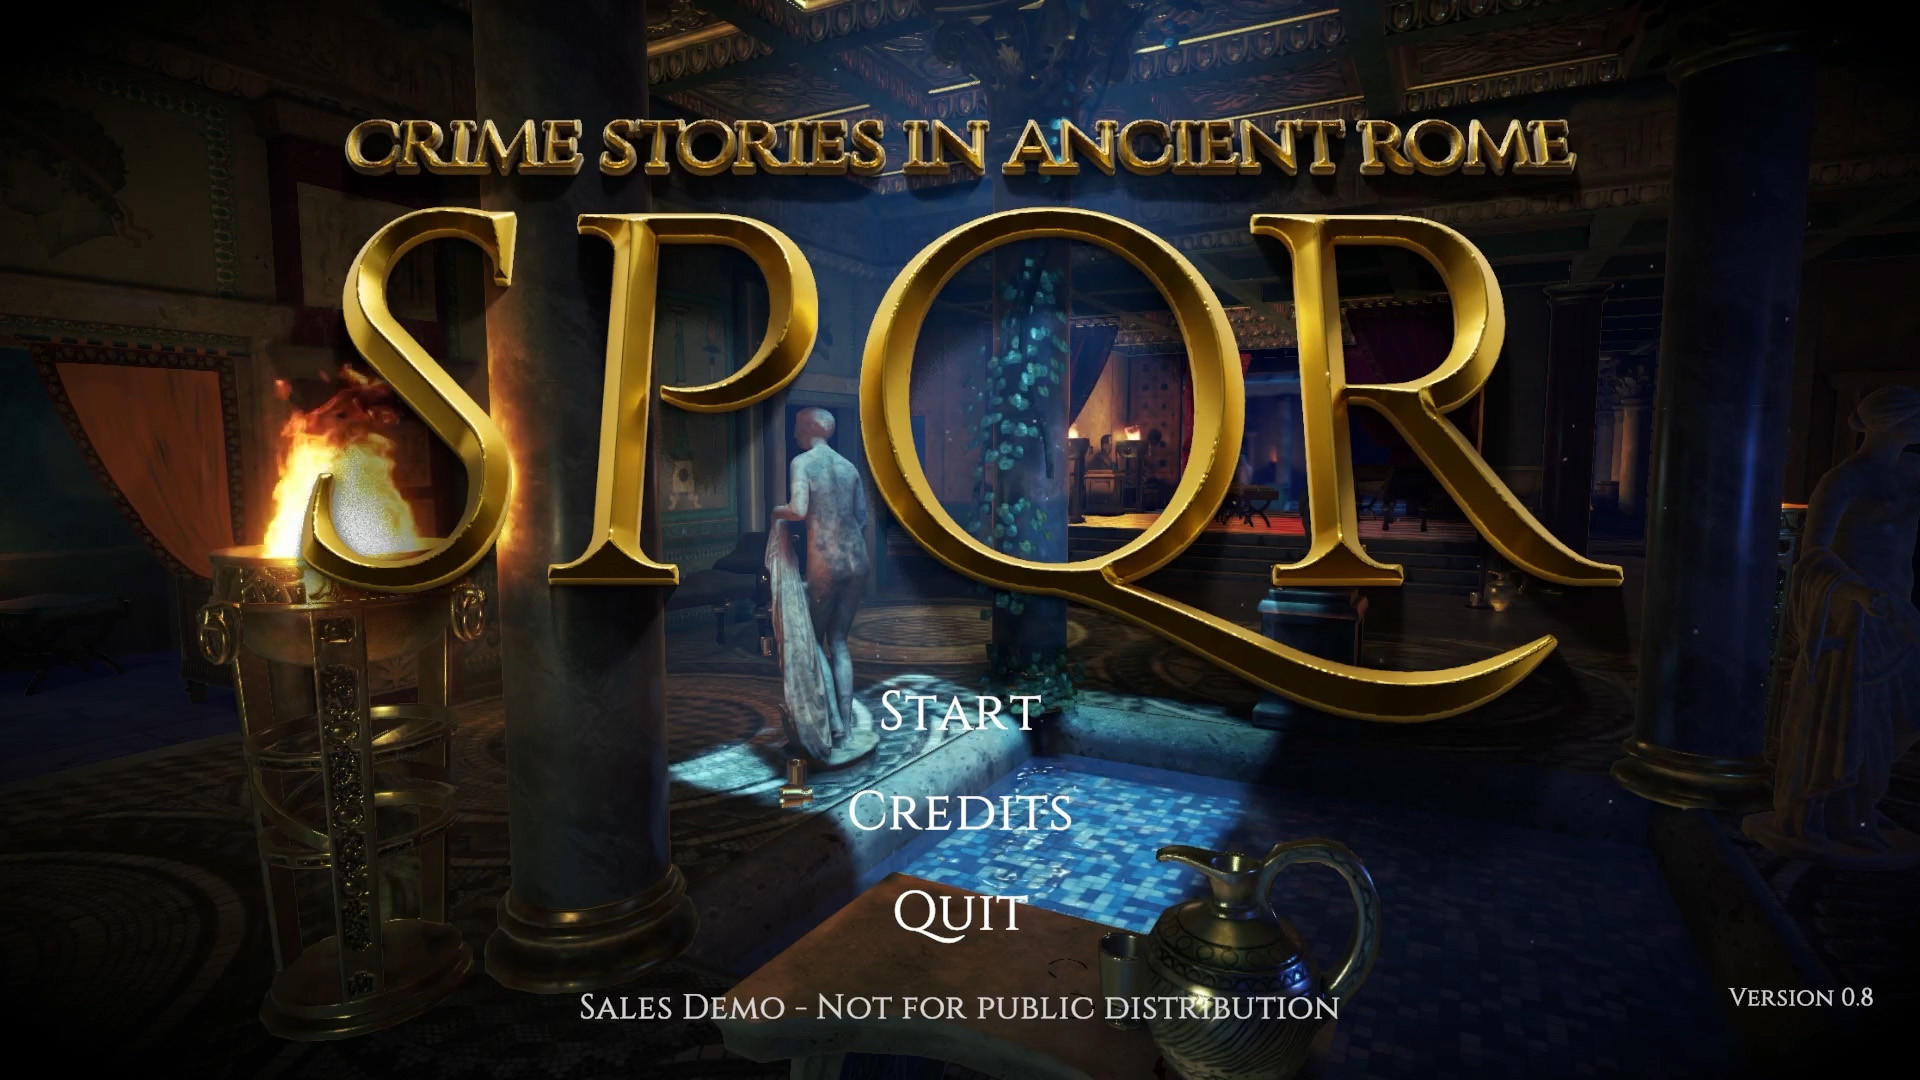 Screenshot 1 of SPQR - Storie di crimine nell'antica Roma 